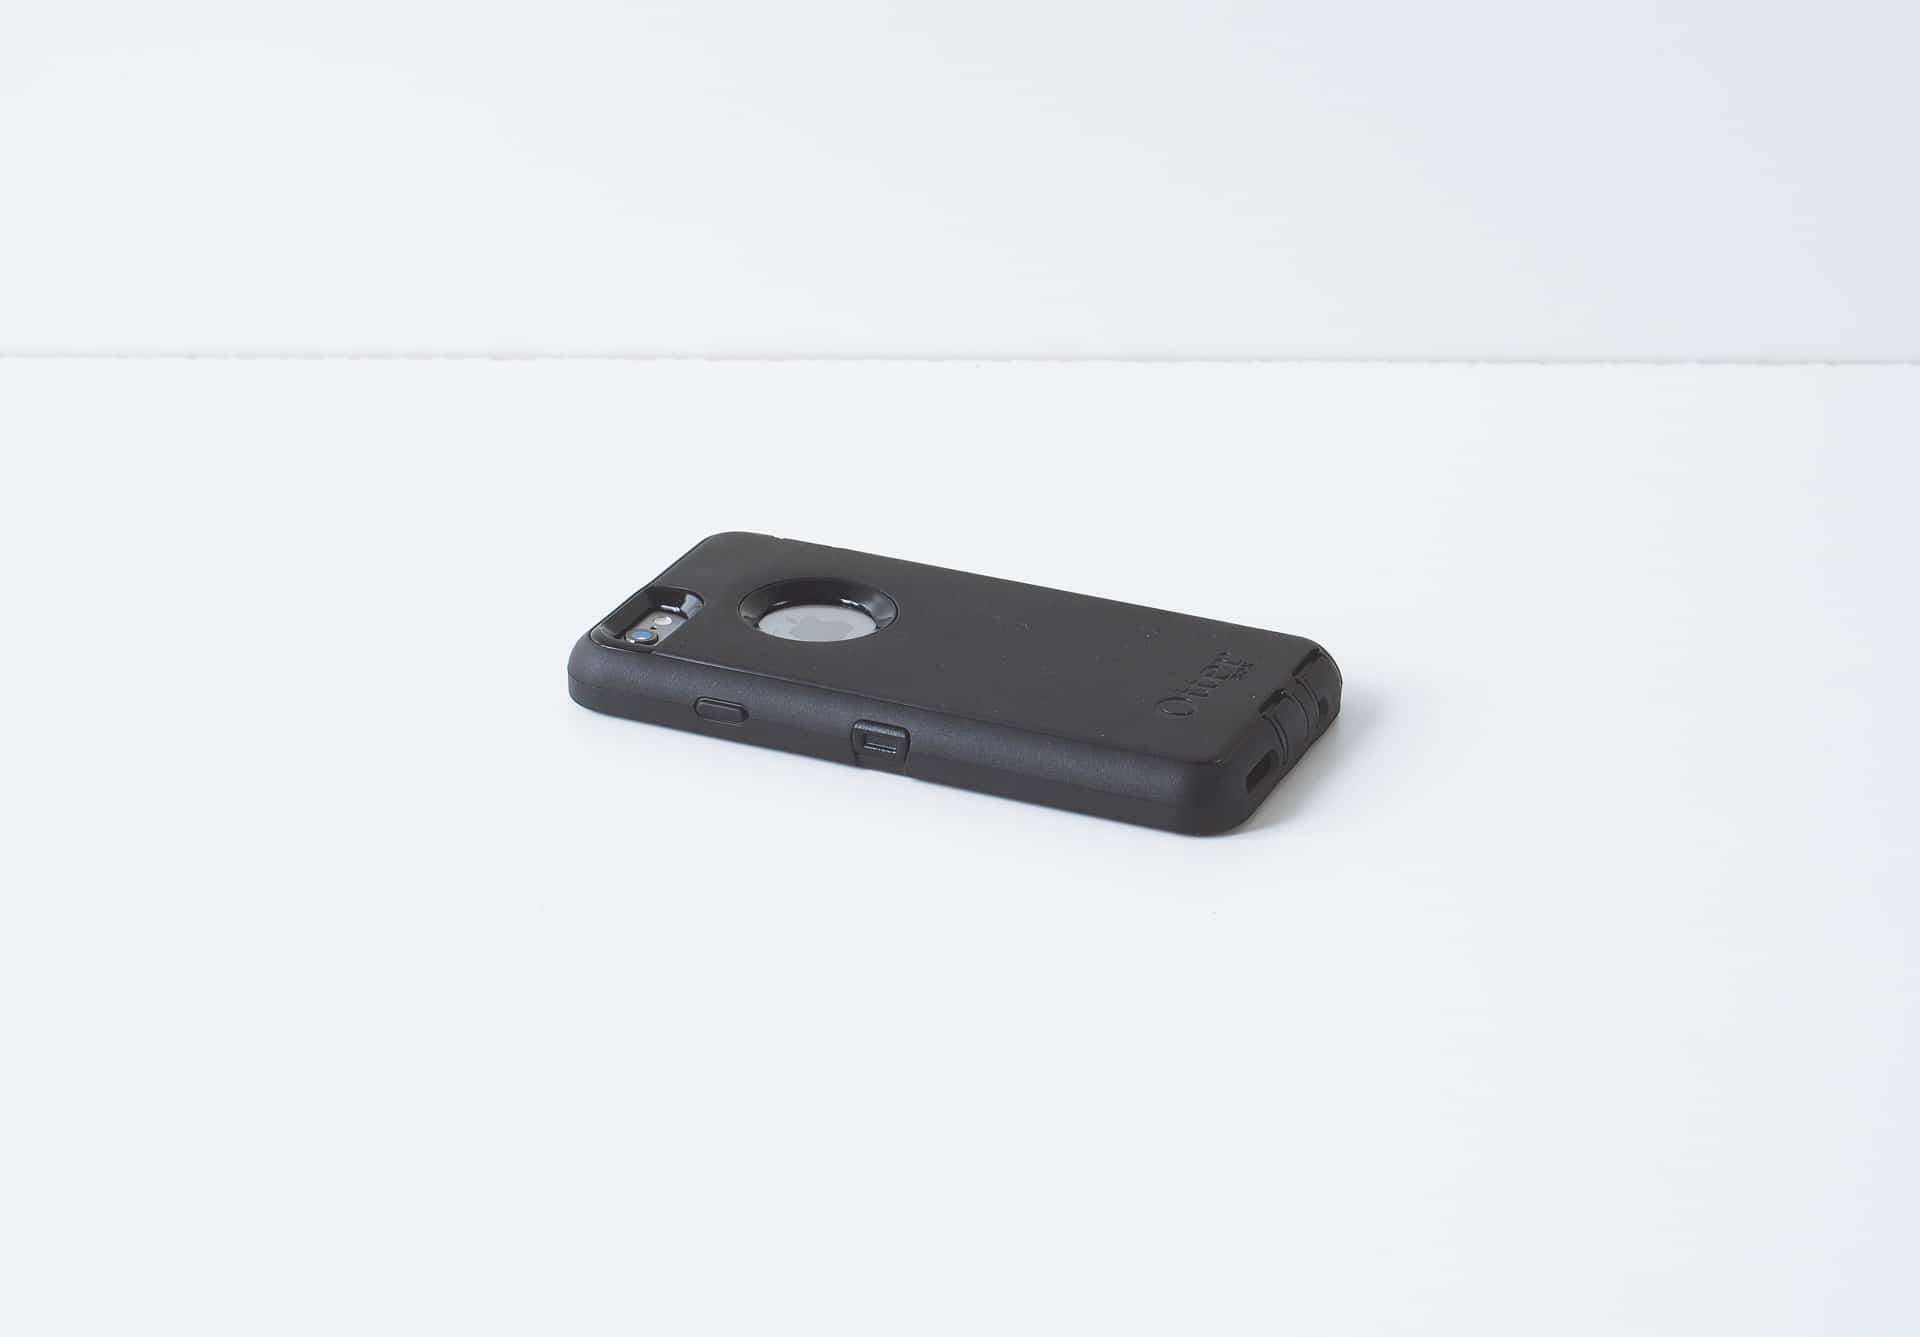 Otterbox Defender iPhone case